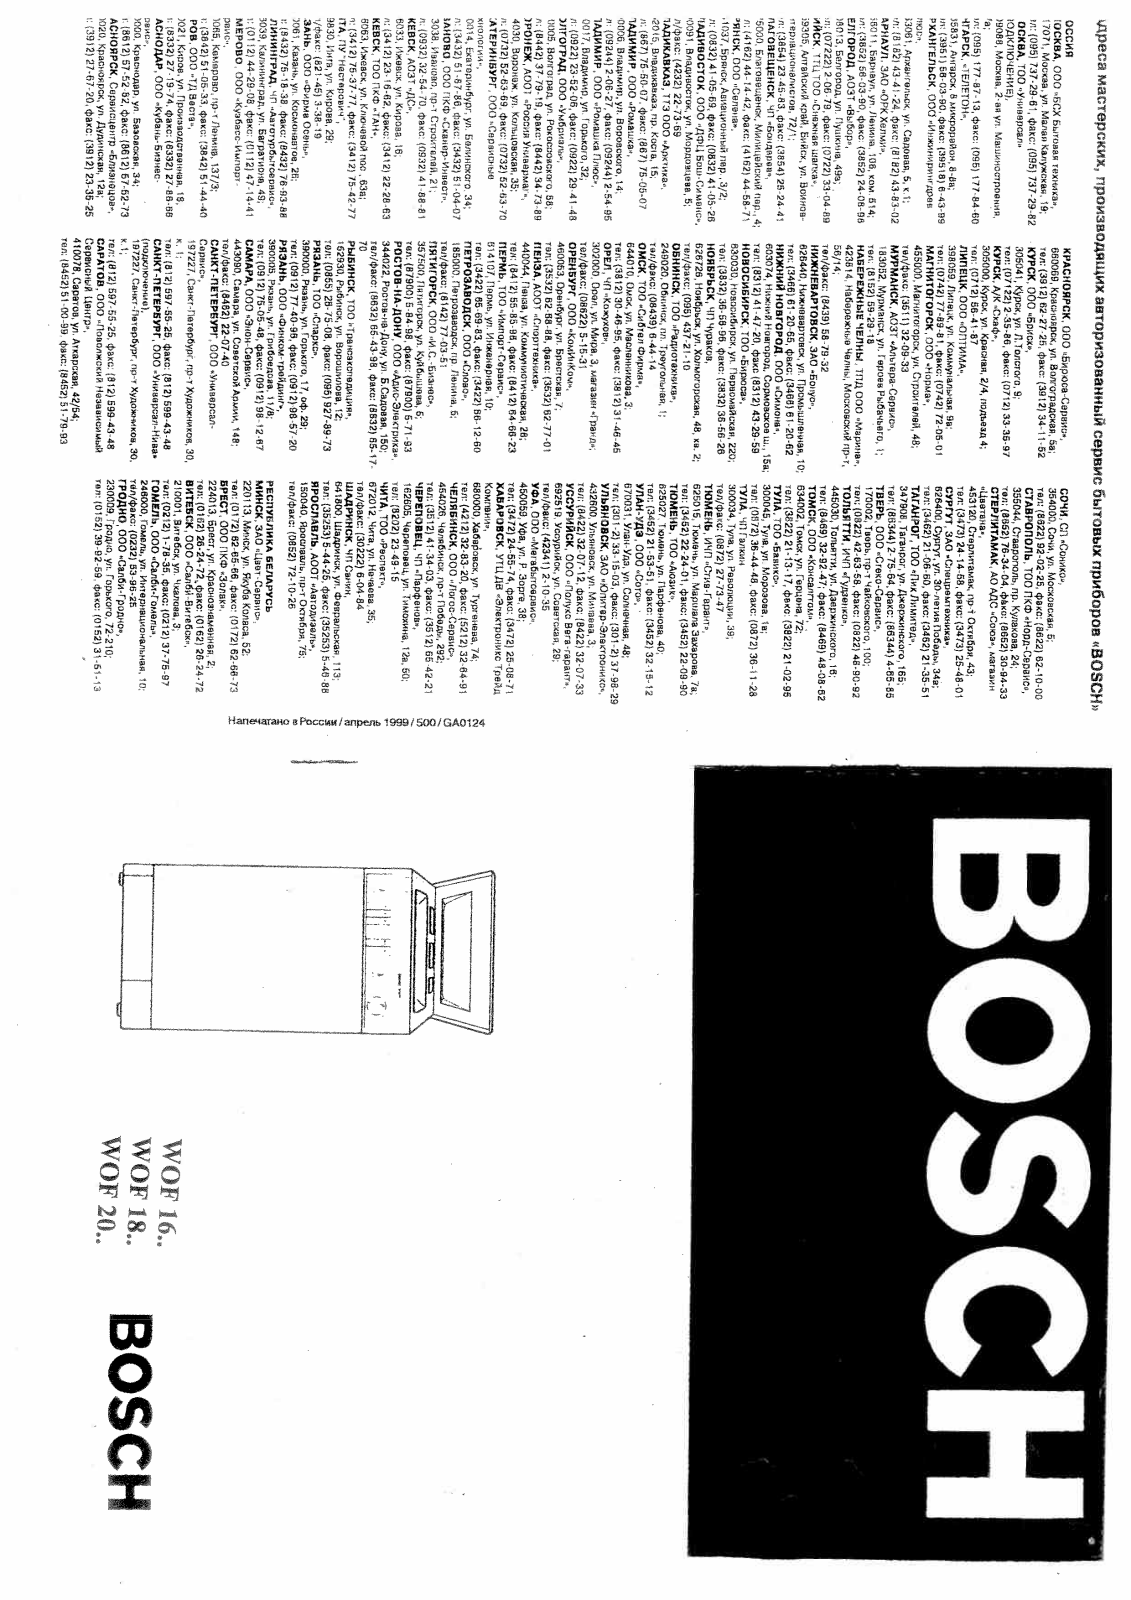 BOSCH WOF 1600 User Manual